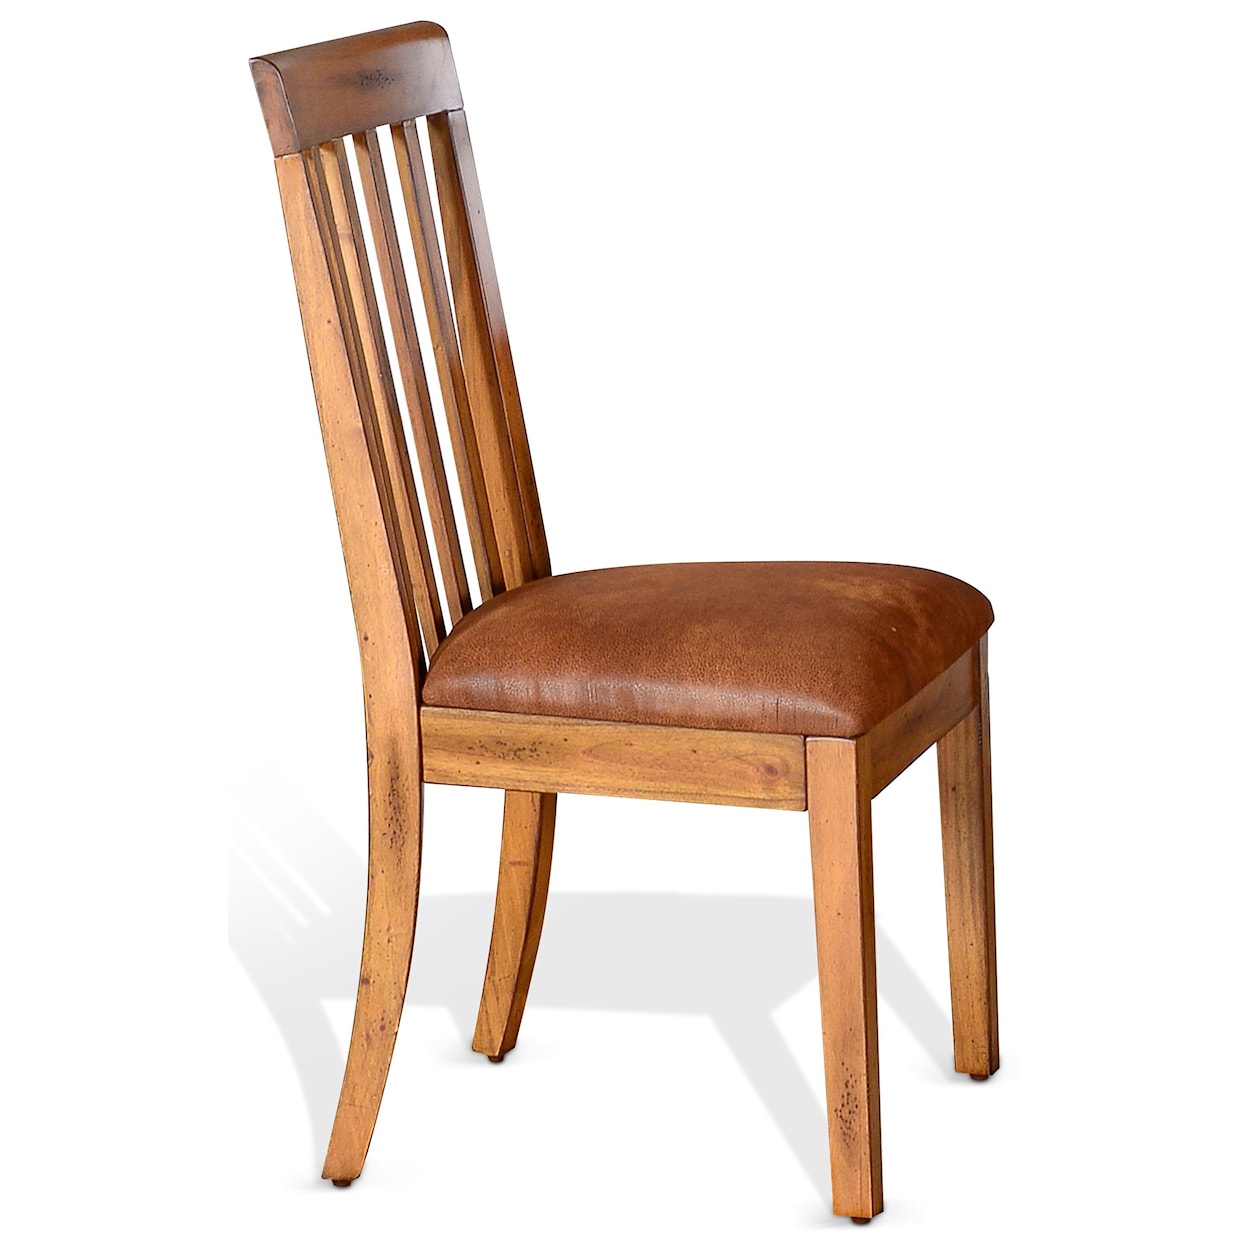 Sunny Designs Sedona 2 Slatback Chair